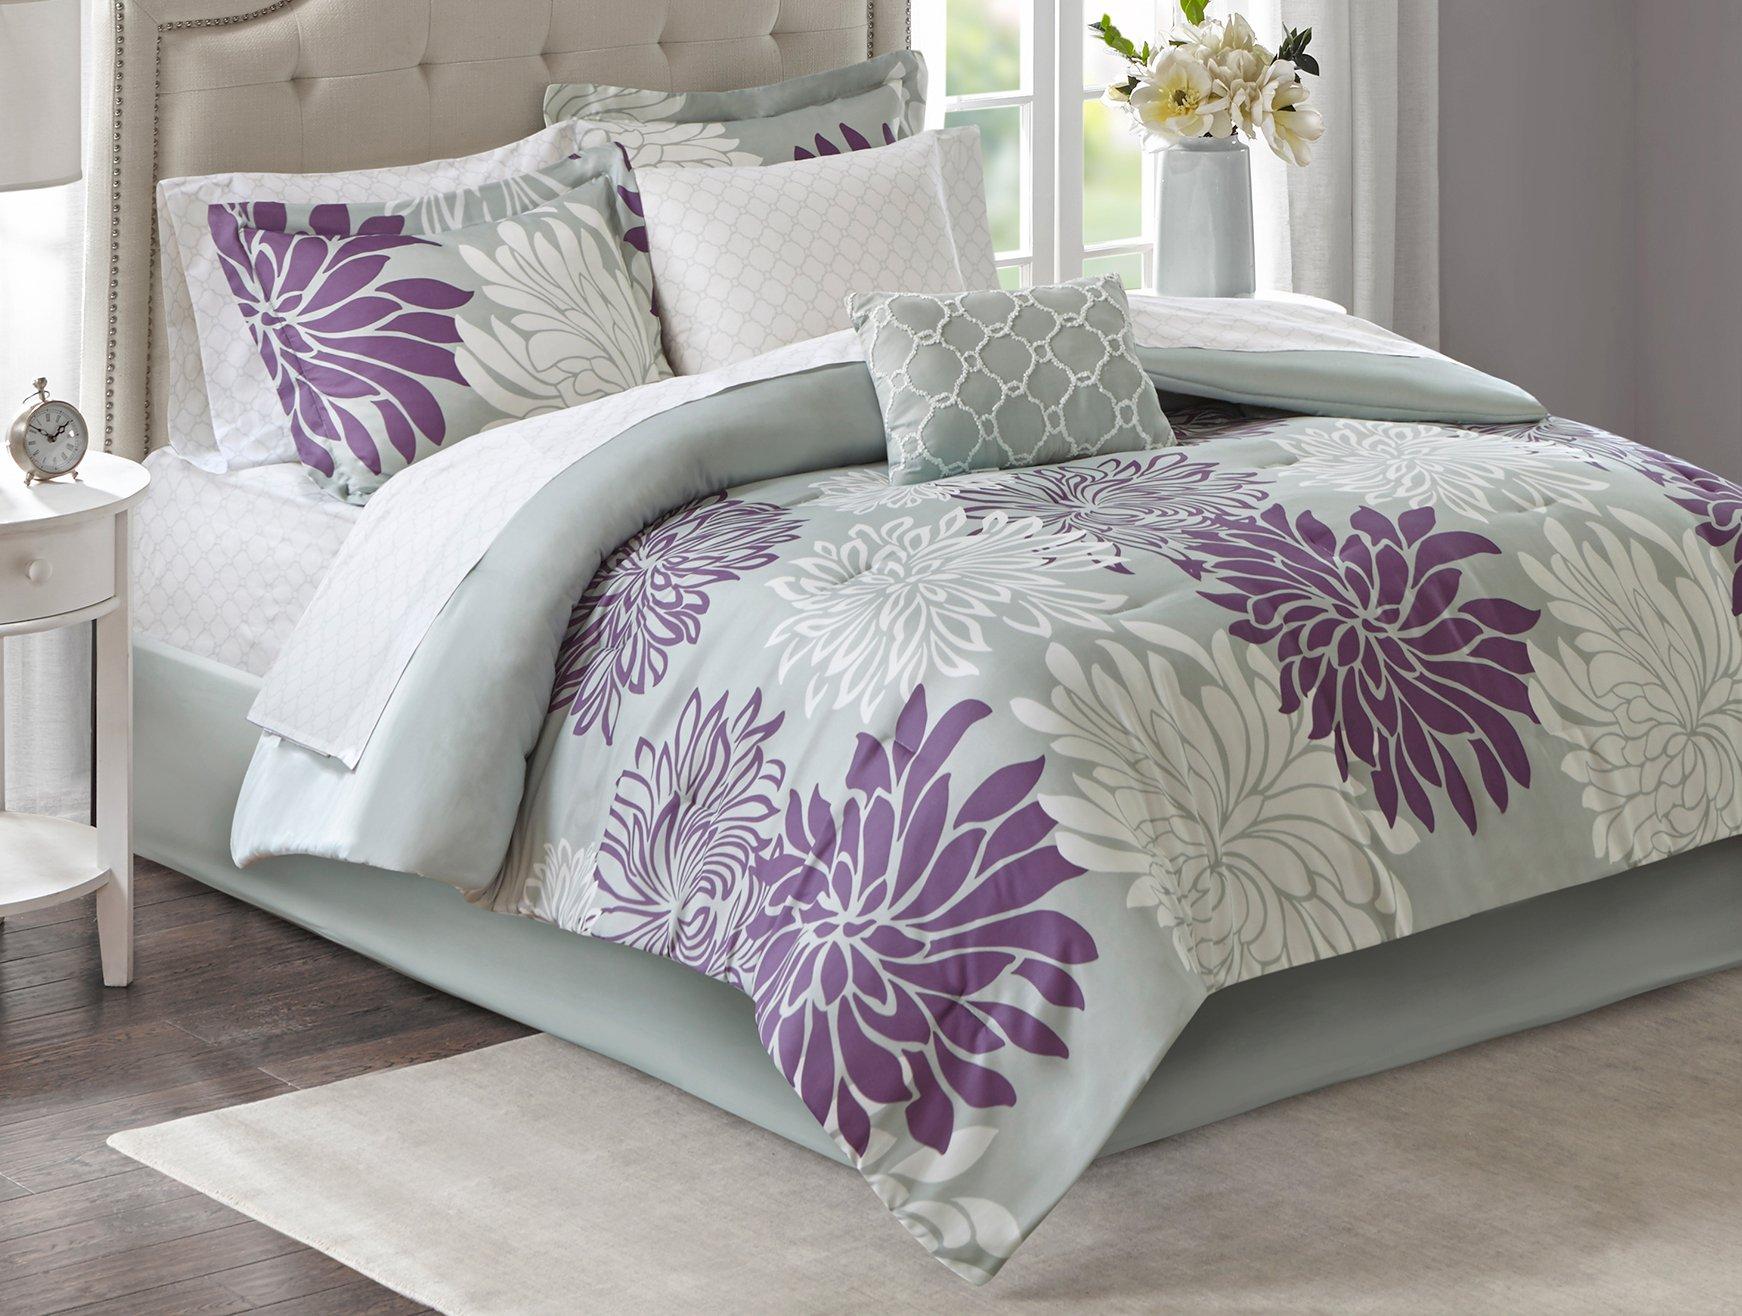 Details about   Madison Park Essentials Marible 9 Piece Complete Comforter Cotton Sheet Bedding